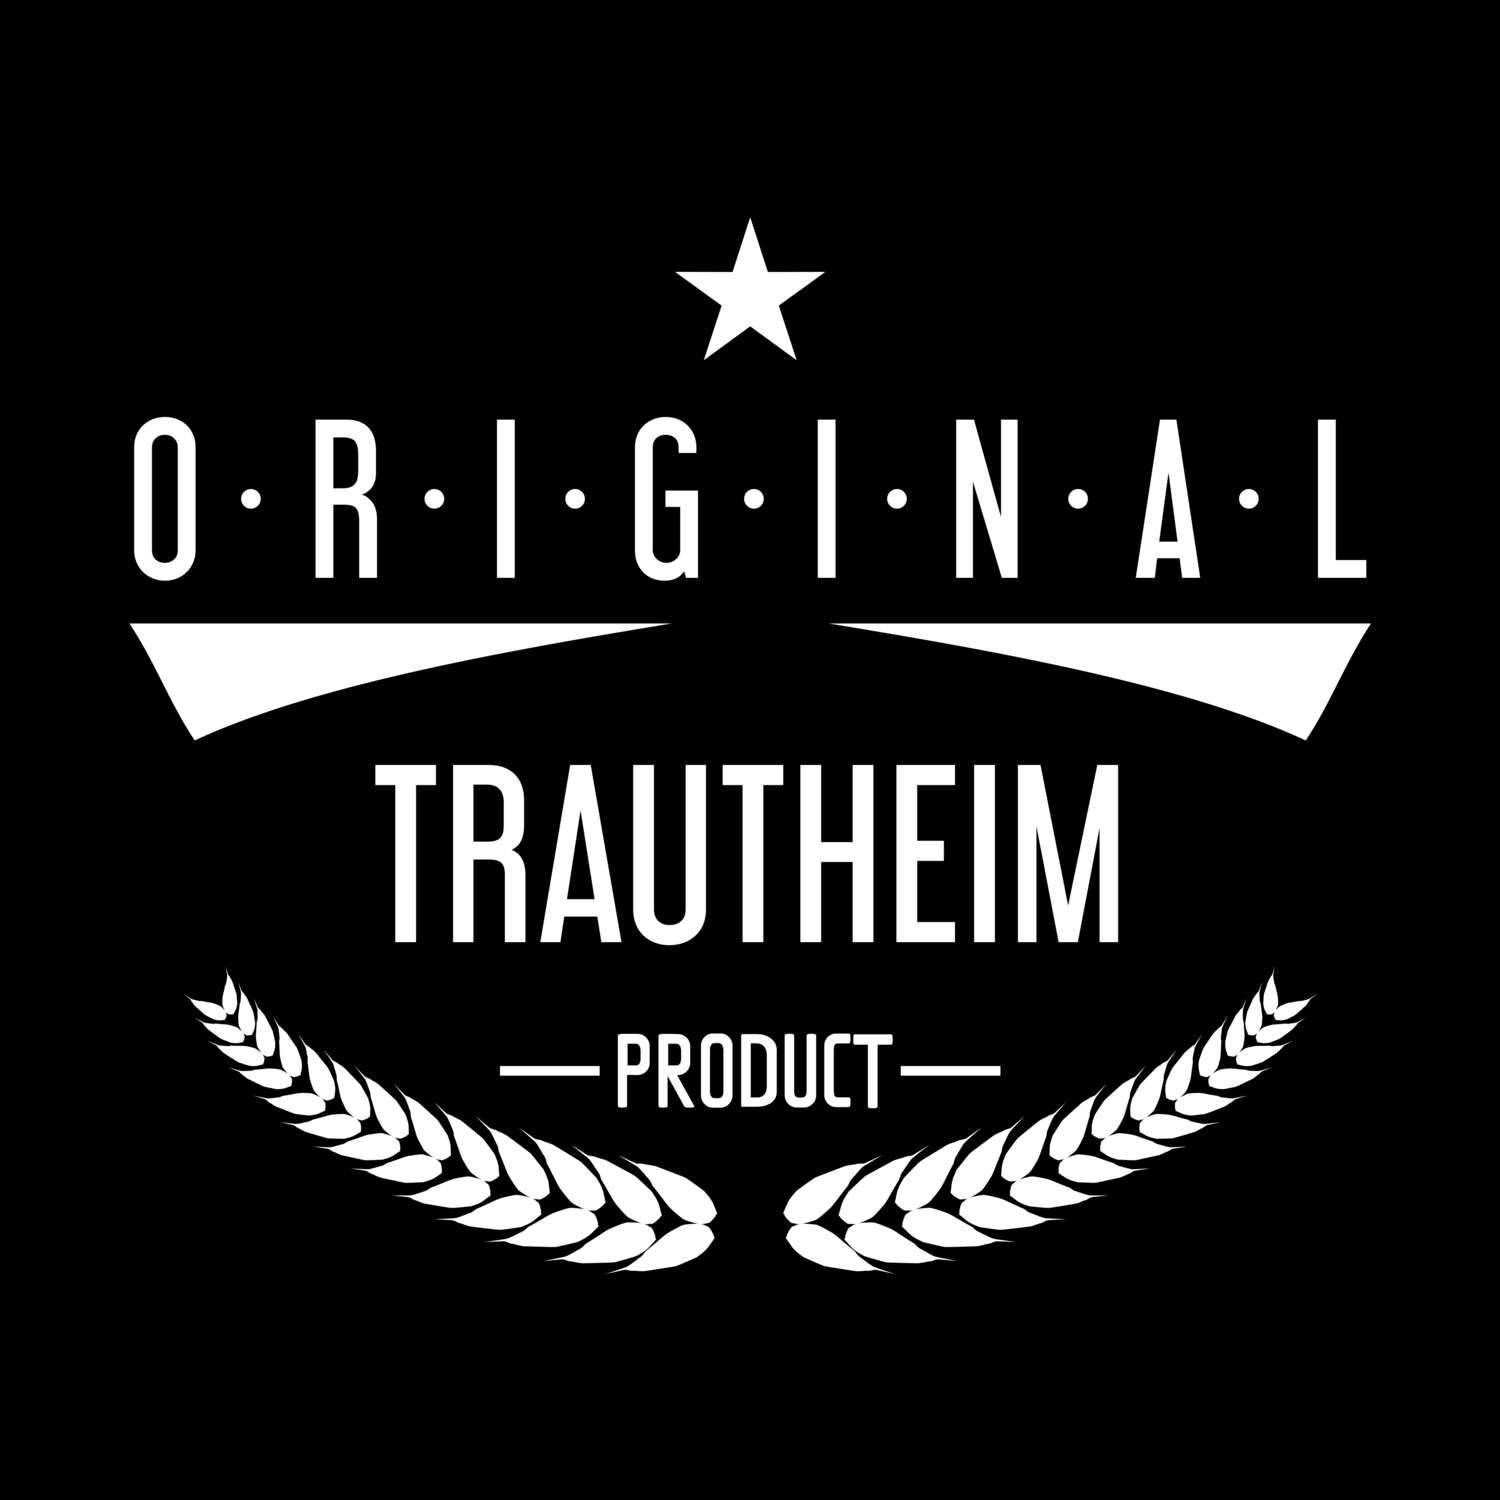 Trautheim T-Shirt »Original Product«